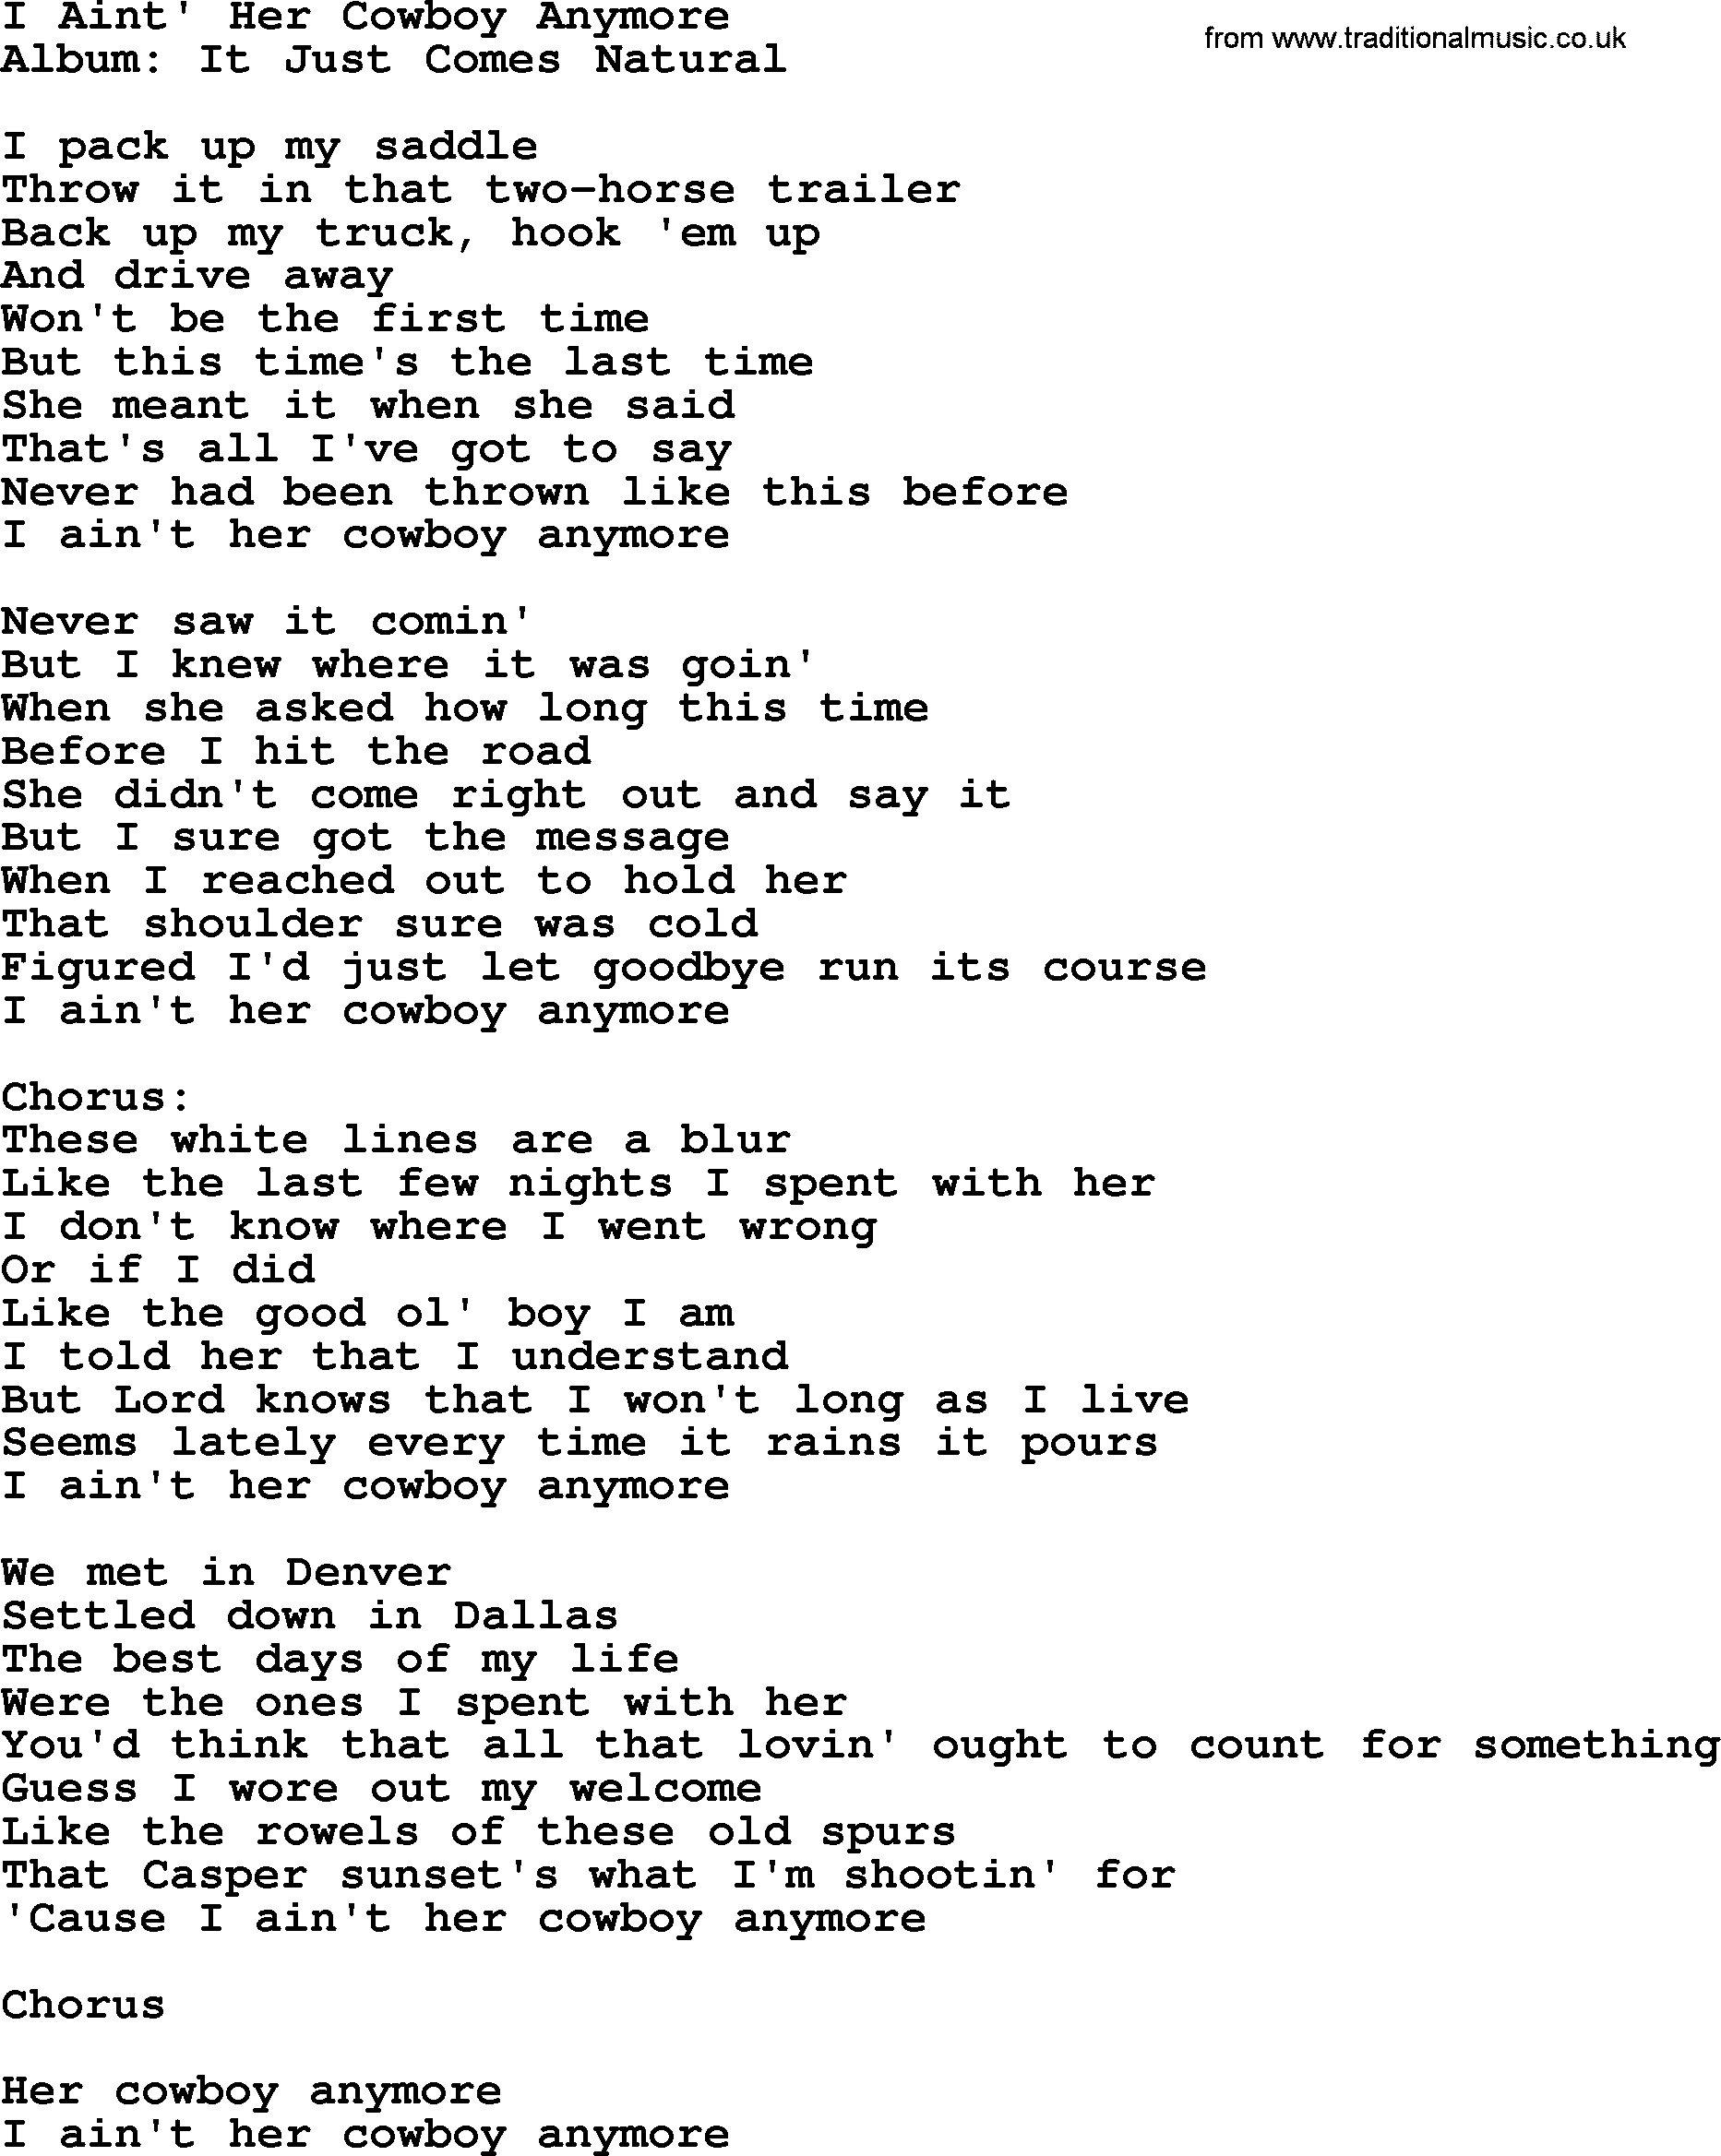 George Strait song: I Aint' Her Cowboy Anymore, lyrics